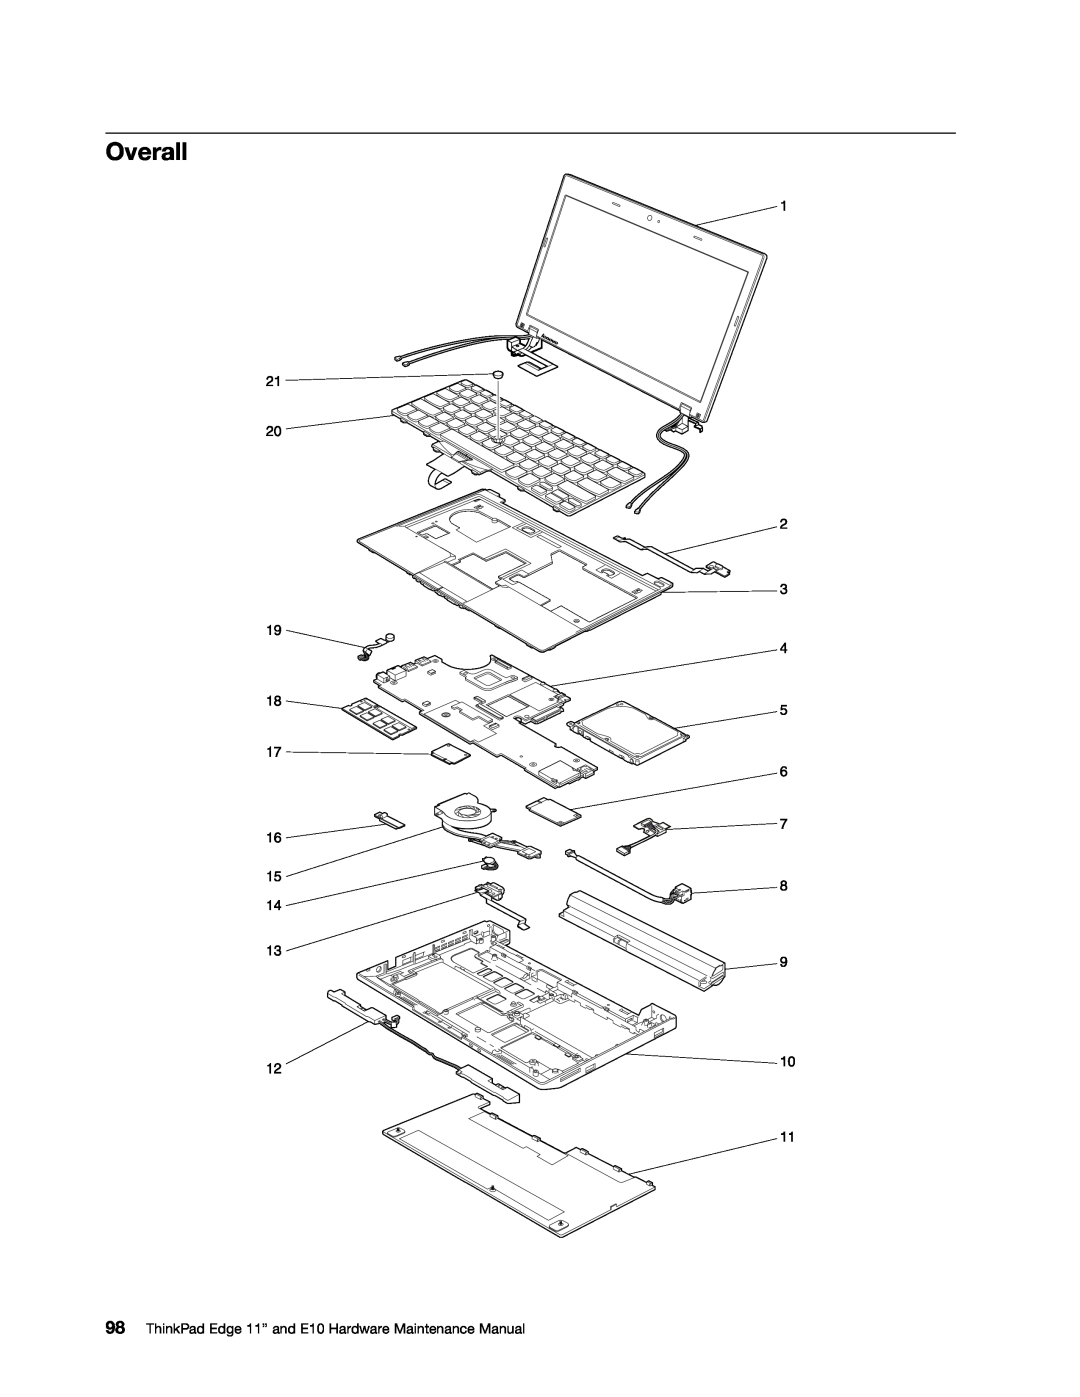 Lenovo manual Overall, ThinkPad Edge 11” and E10 Hardware Maintenance Manual 